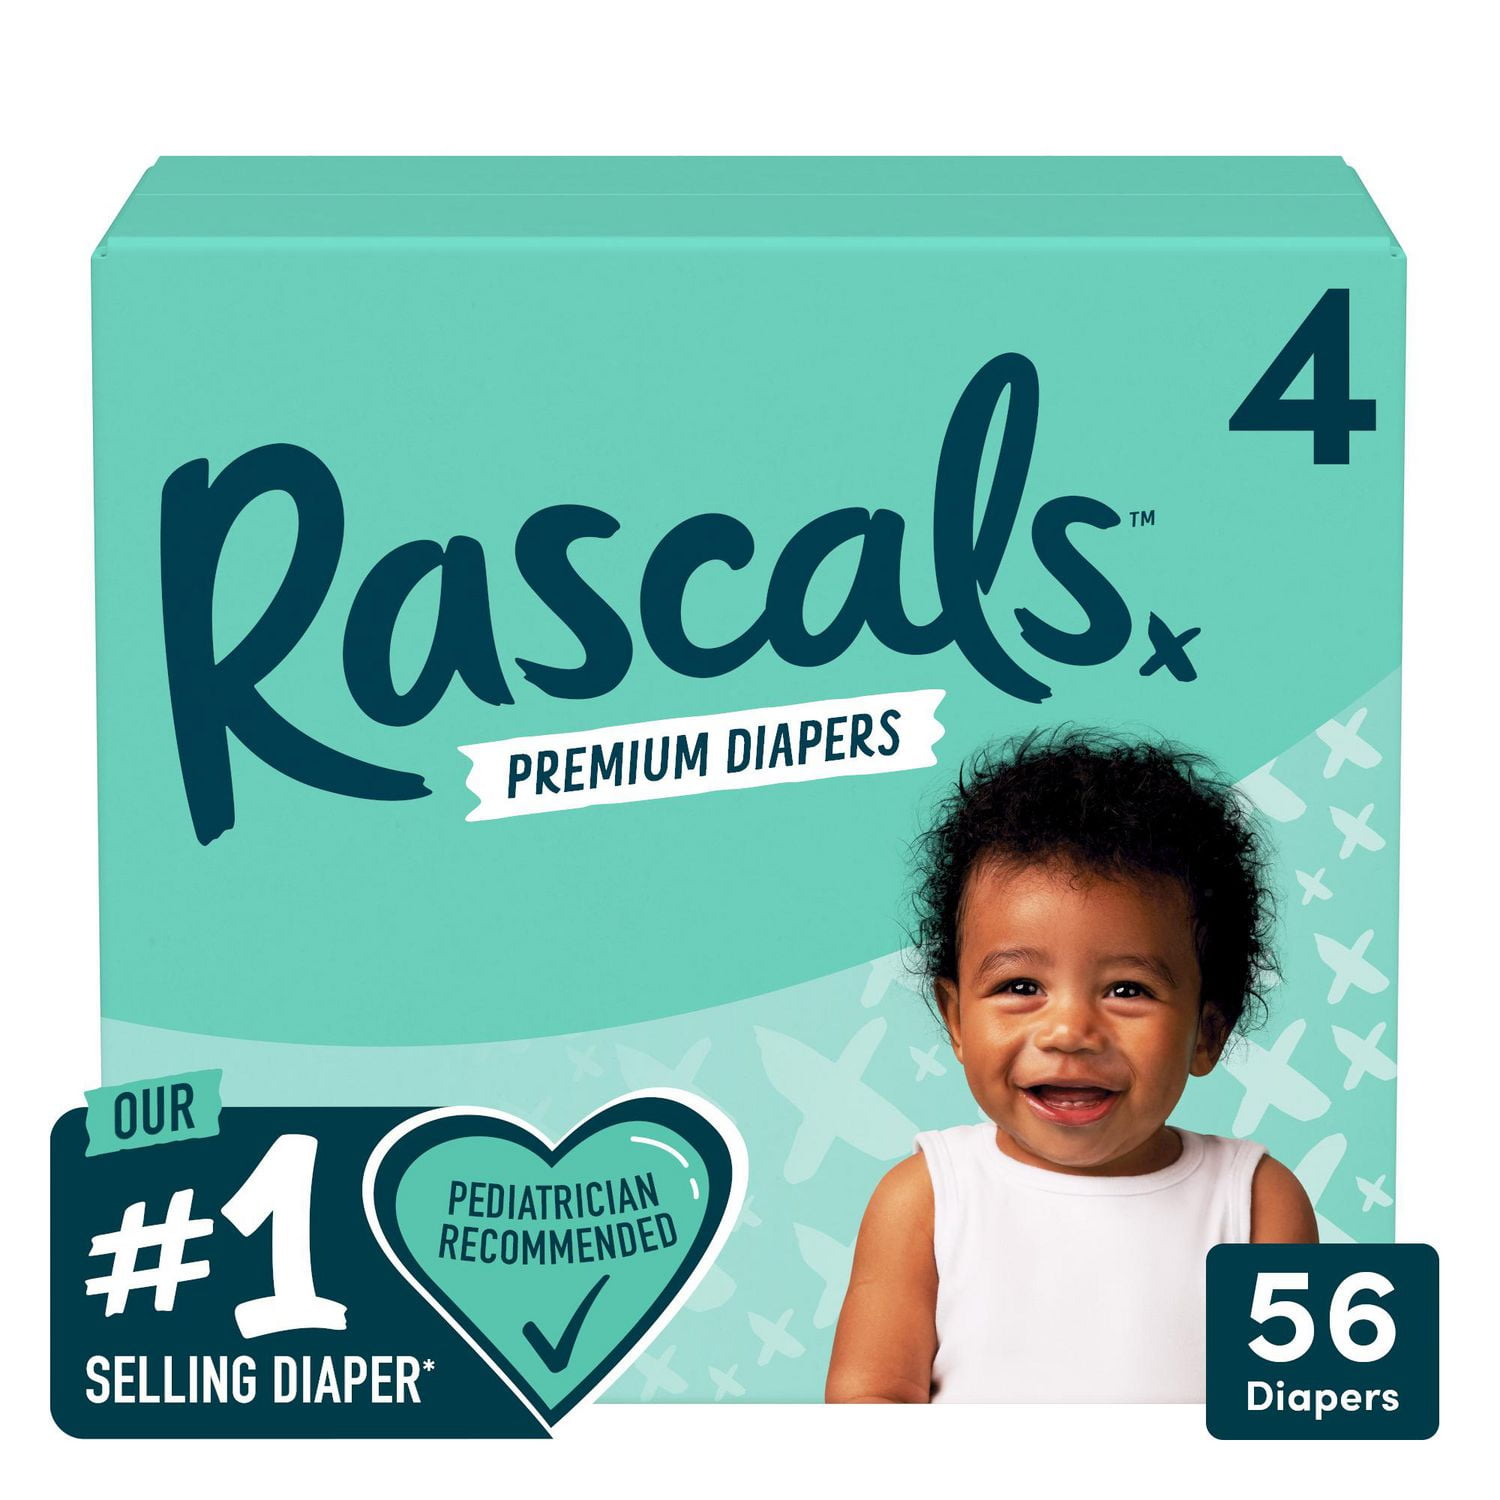 Rascal Friends Premium Diapers - Reviewed